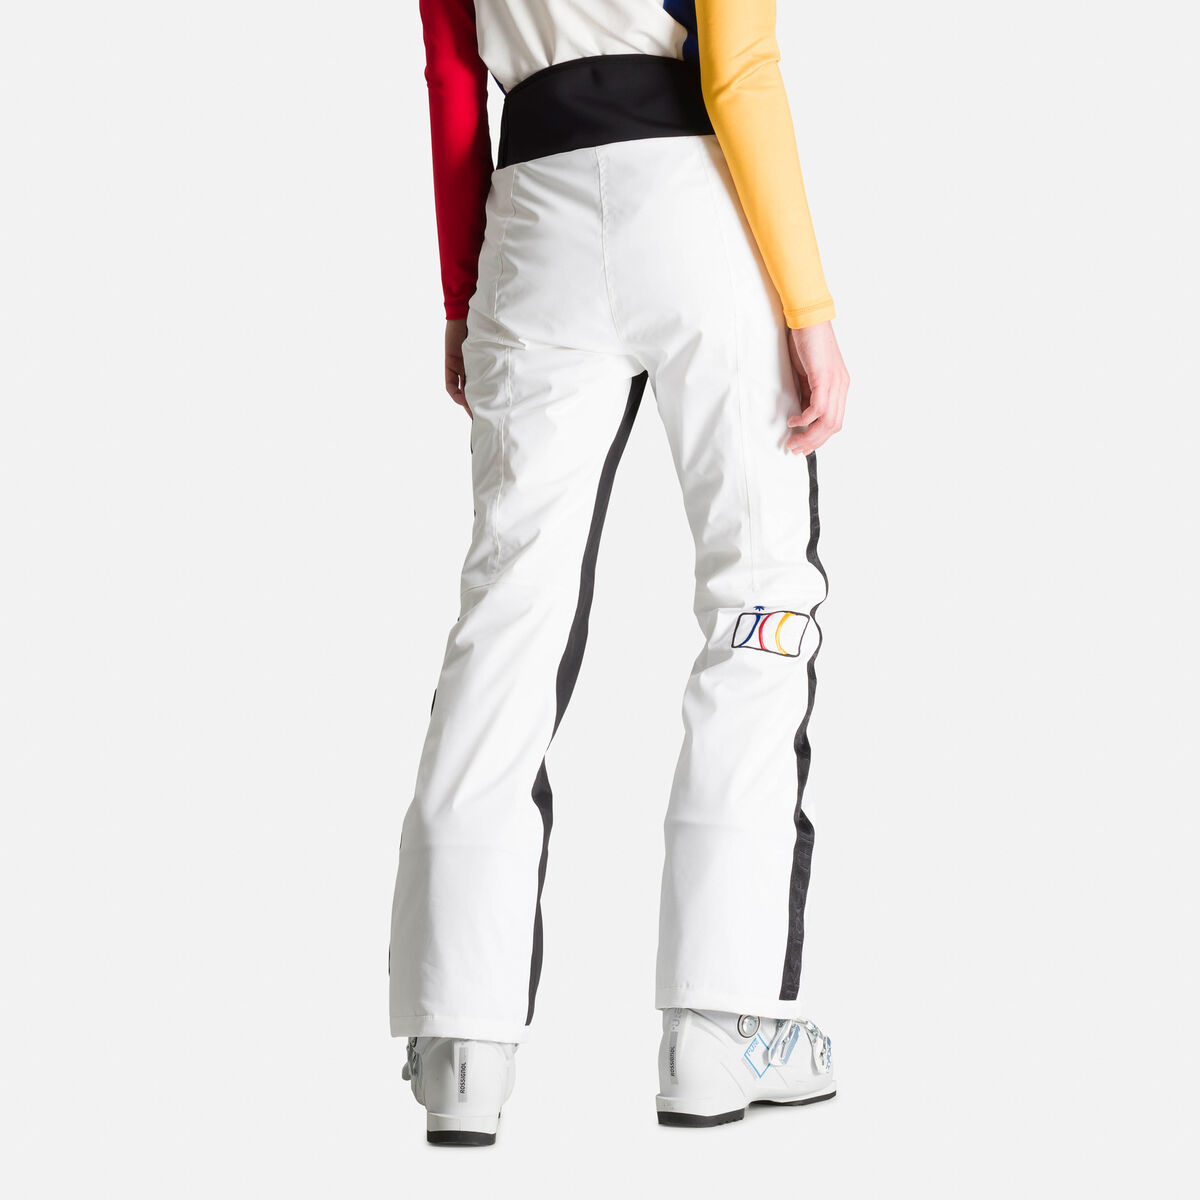 Pantalones de esquí Stellar de JCC para mujer